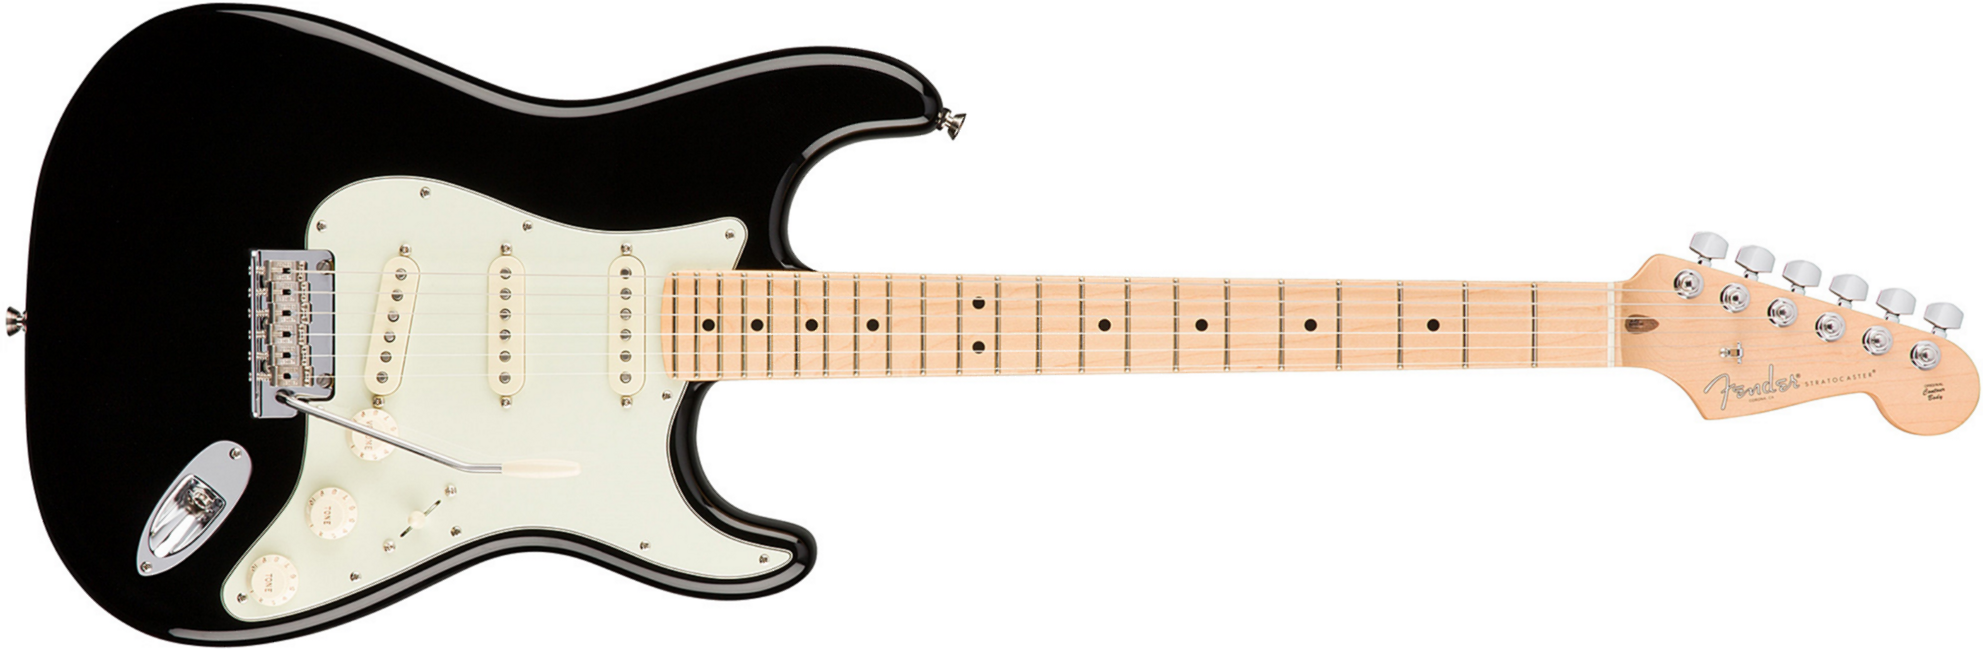 Fender Strat American Professional 2017 3s Usa Mn - Black - E-Gitarre in Str-Form - Main picture